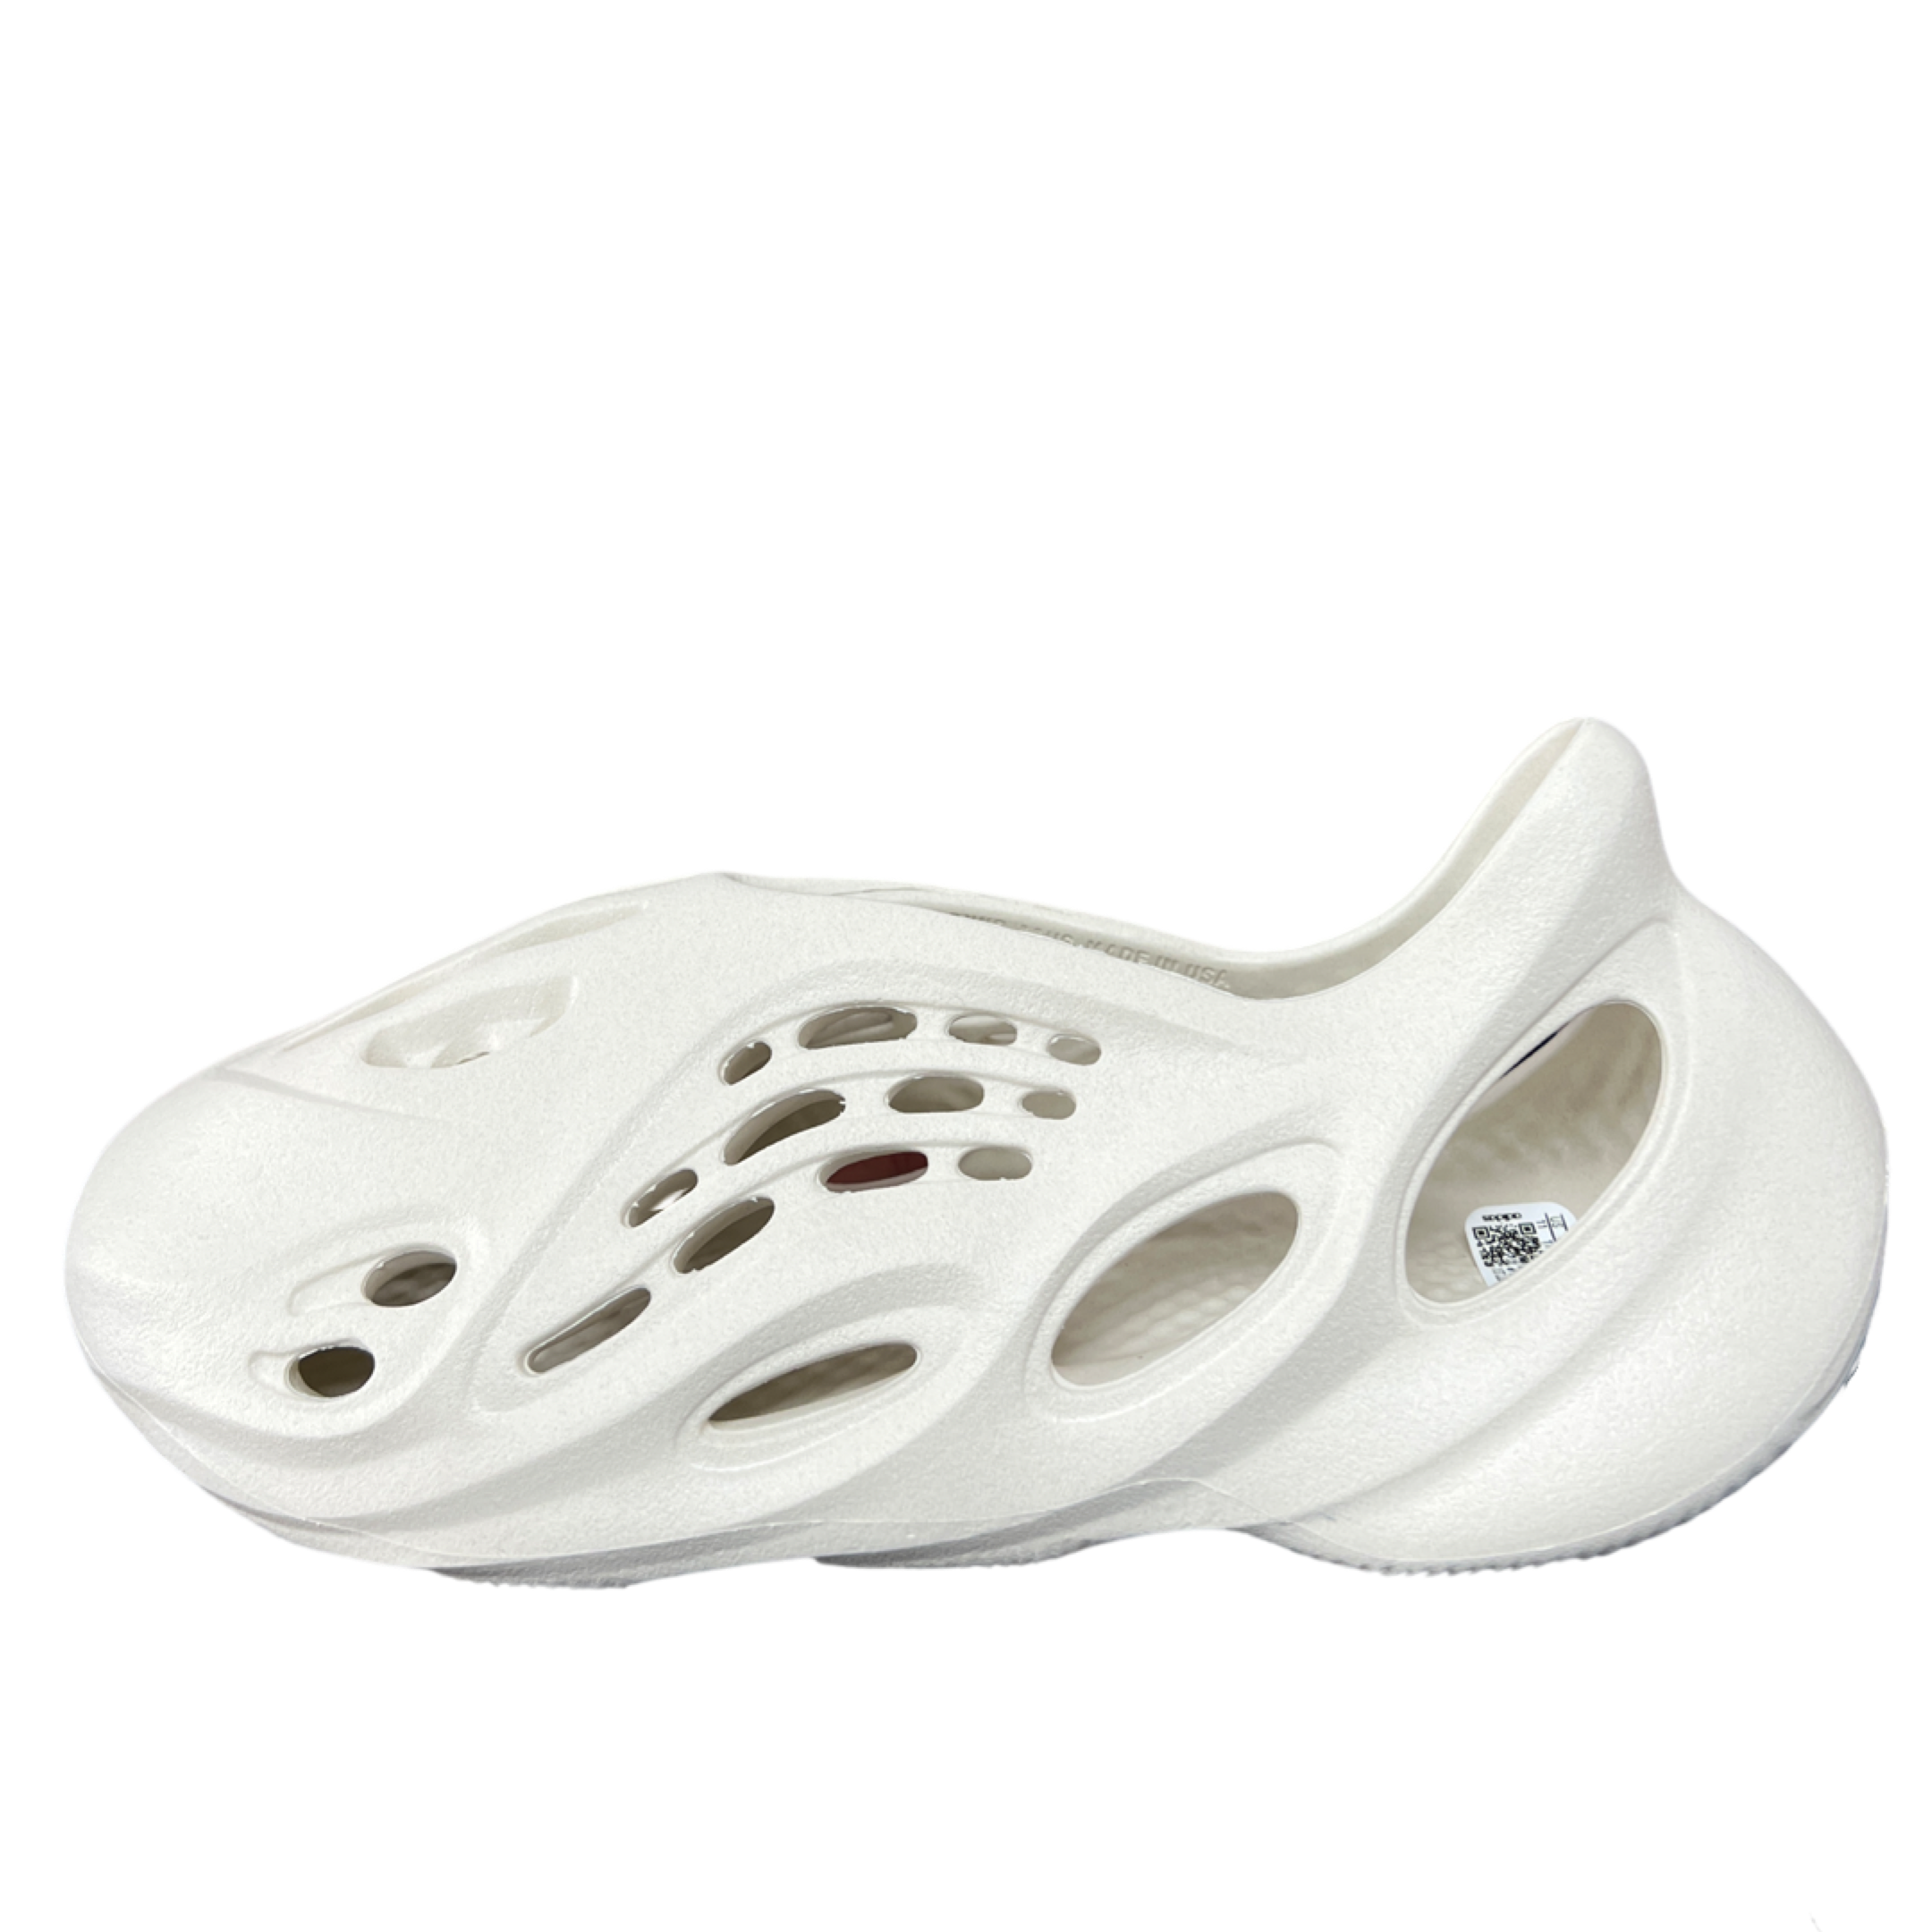 Adidas Yeezy Foam Runner Sand (FY4567) Size 12 Brand New